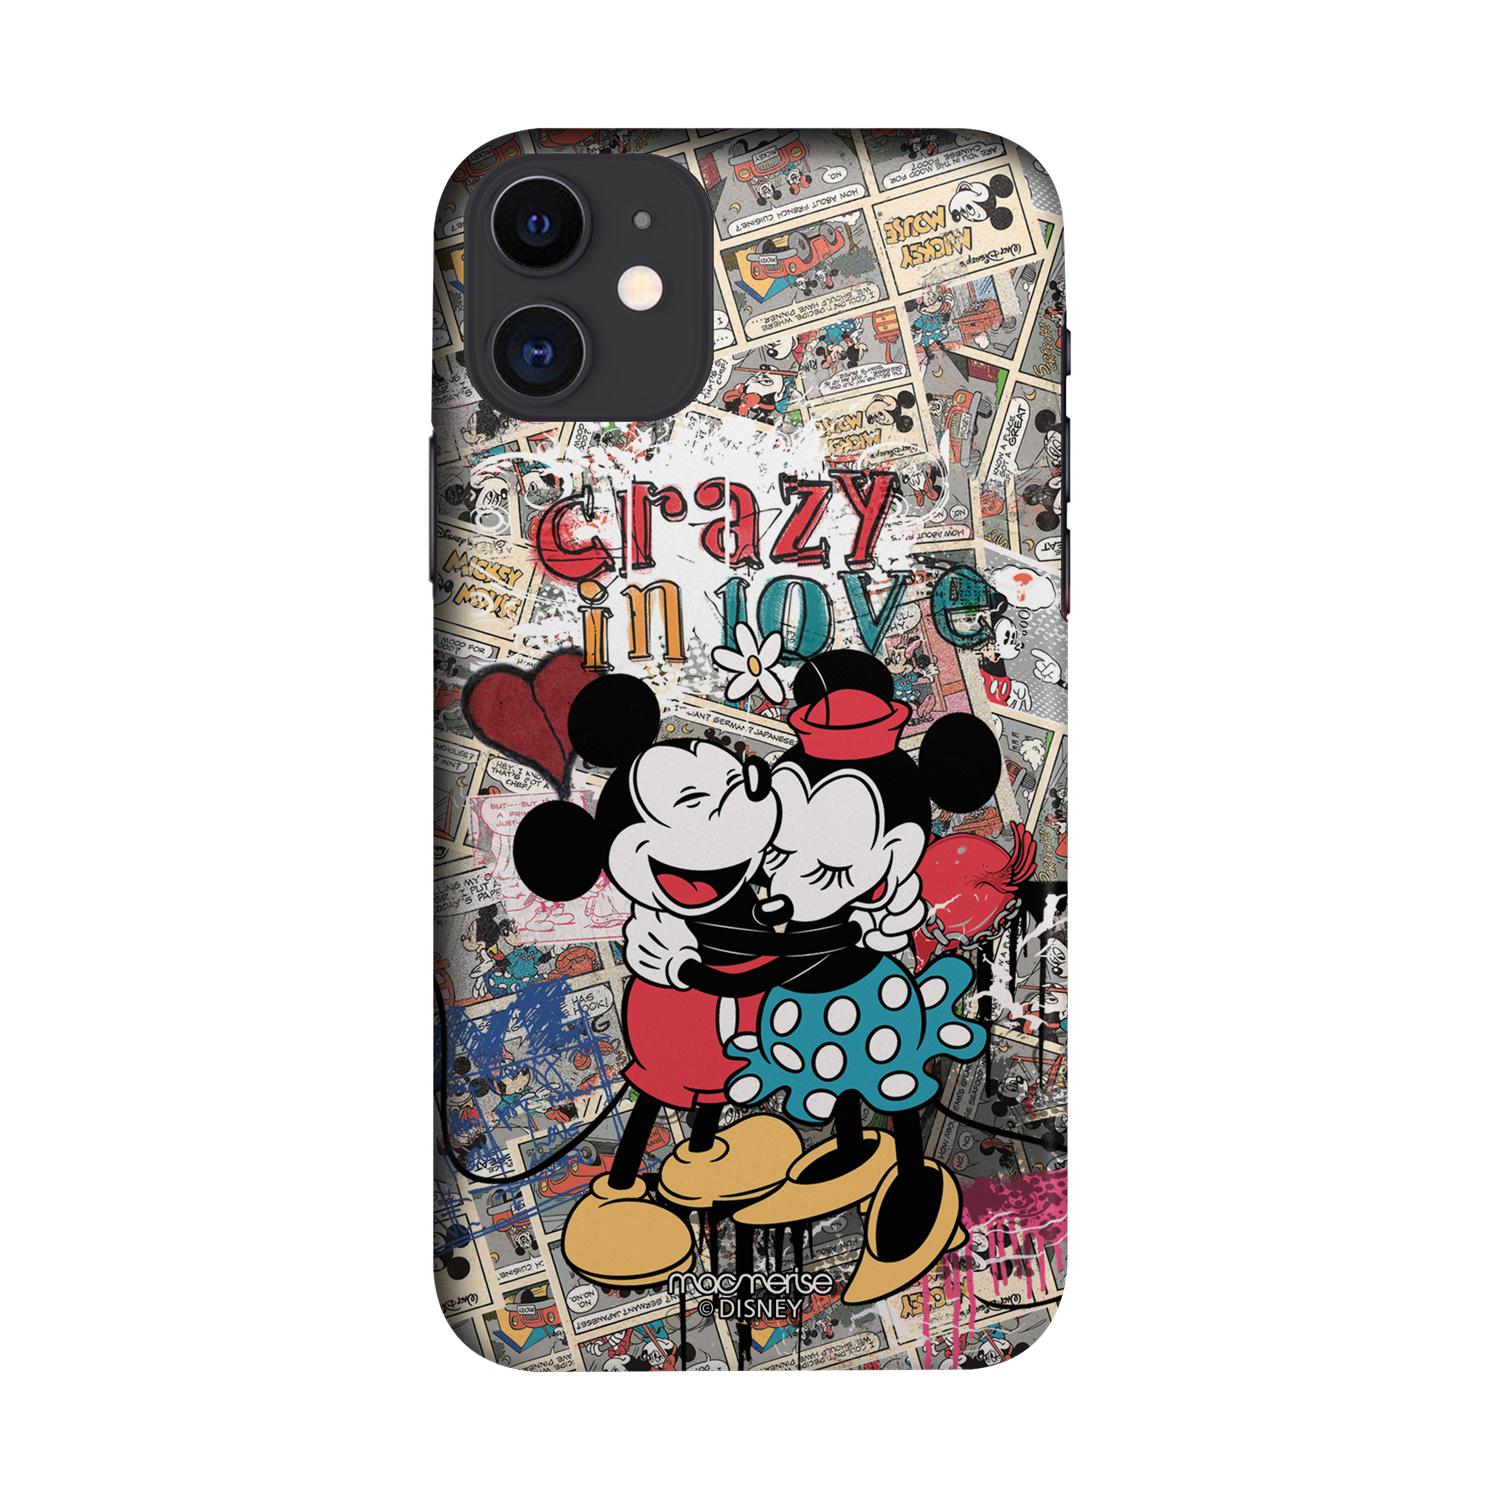 Buy Crazy in love - Sleek Phone Case for iPhone 11 Online